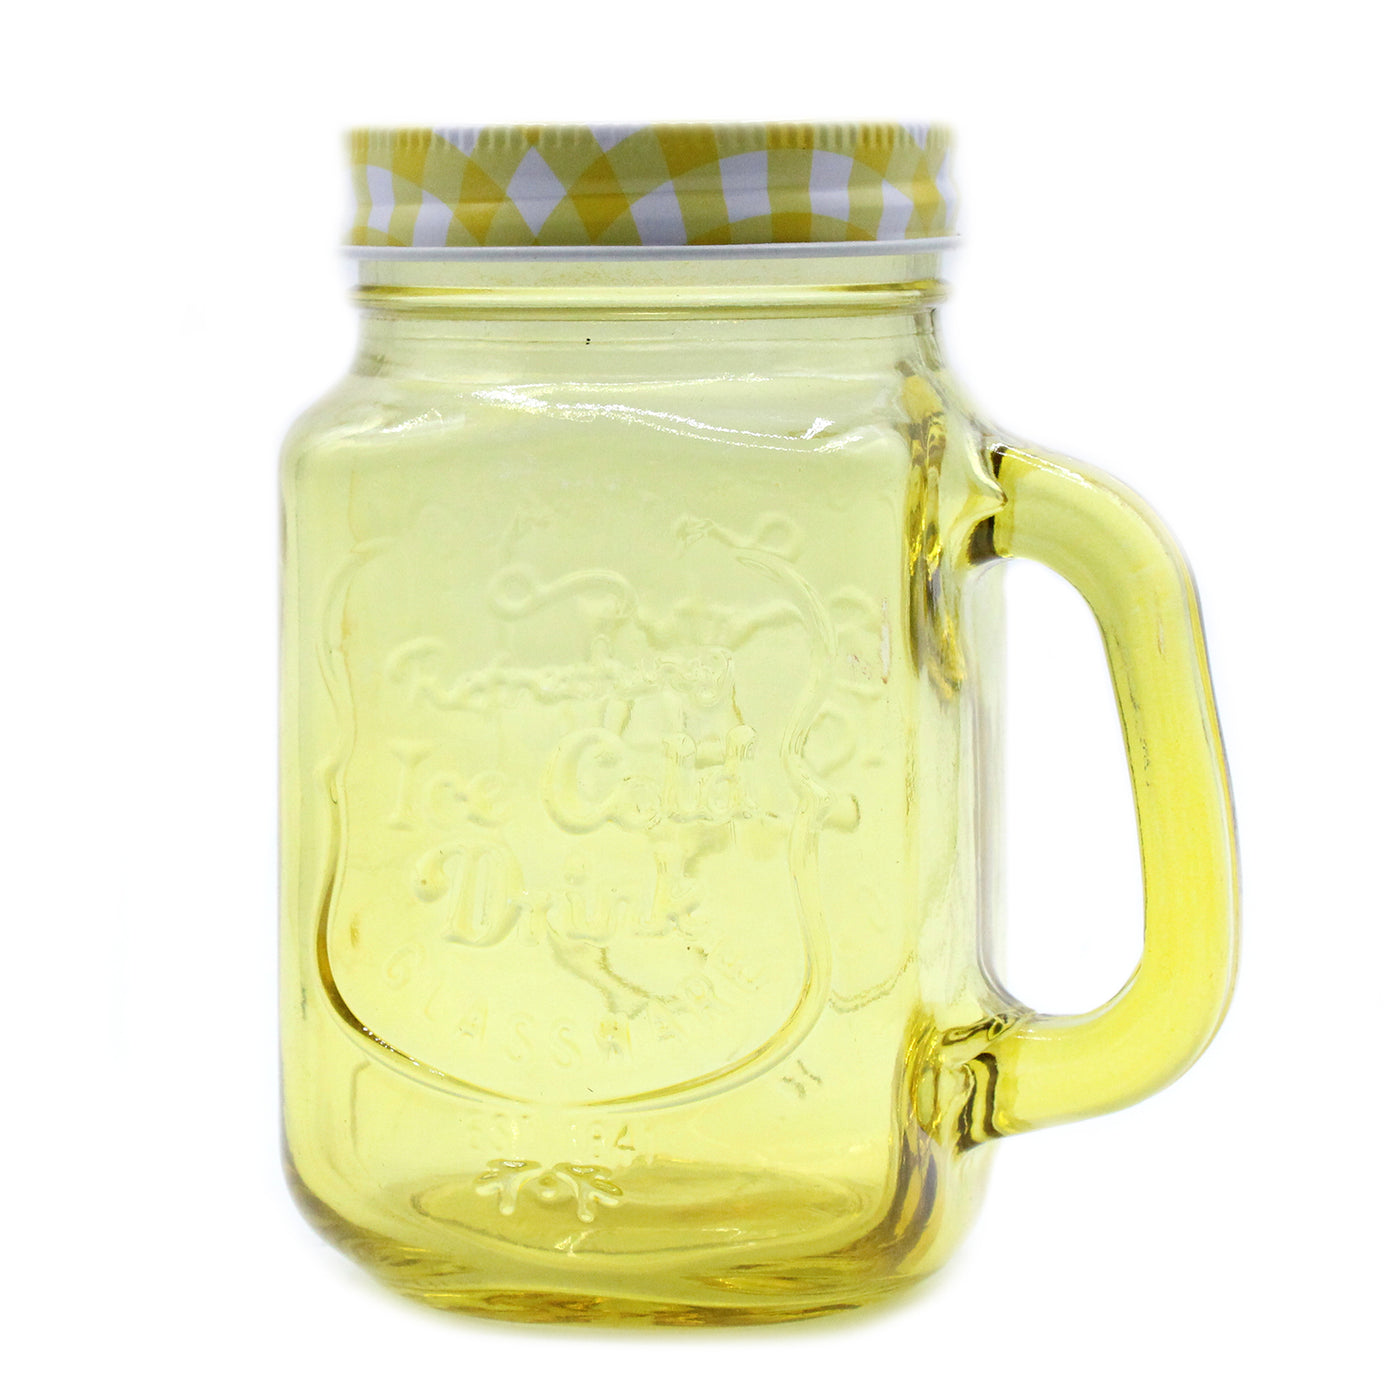 Retro Yellow Mason Jar For Cold Drinks.